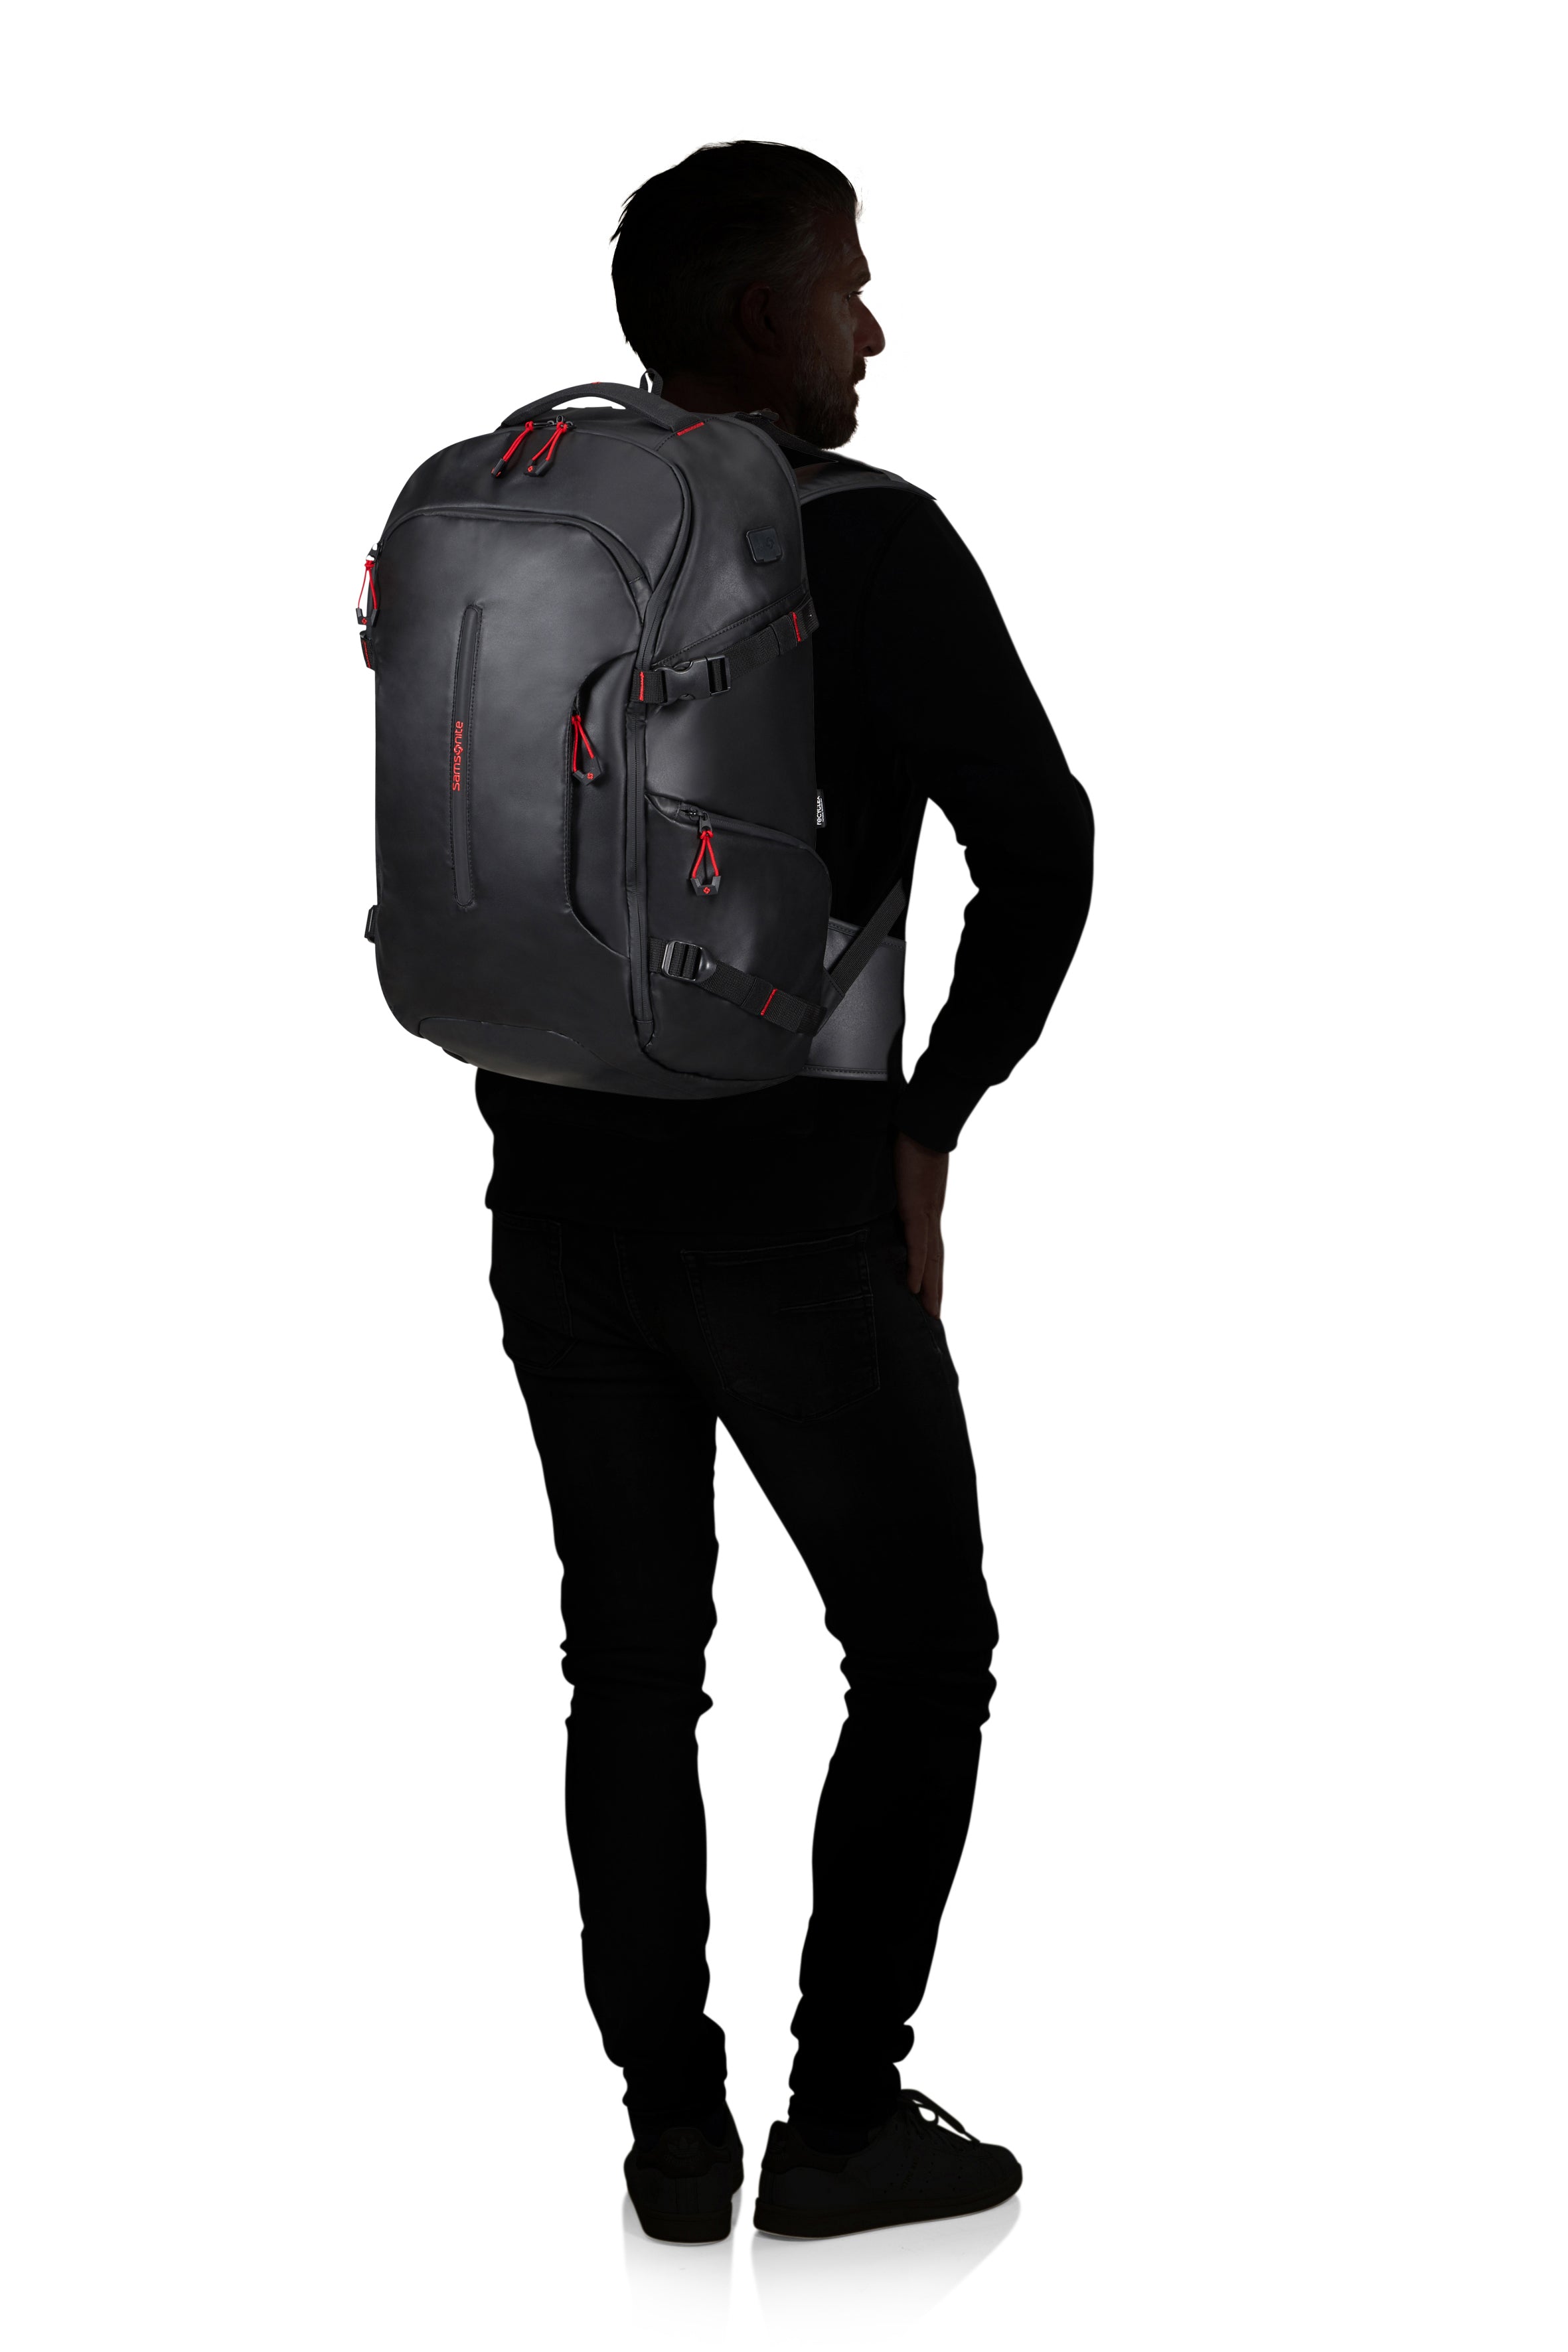 Samsonite Ecodiver Travel Backpack Small